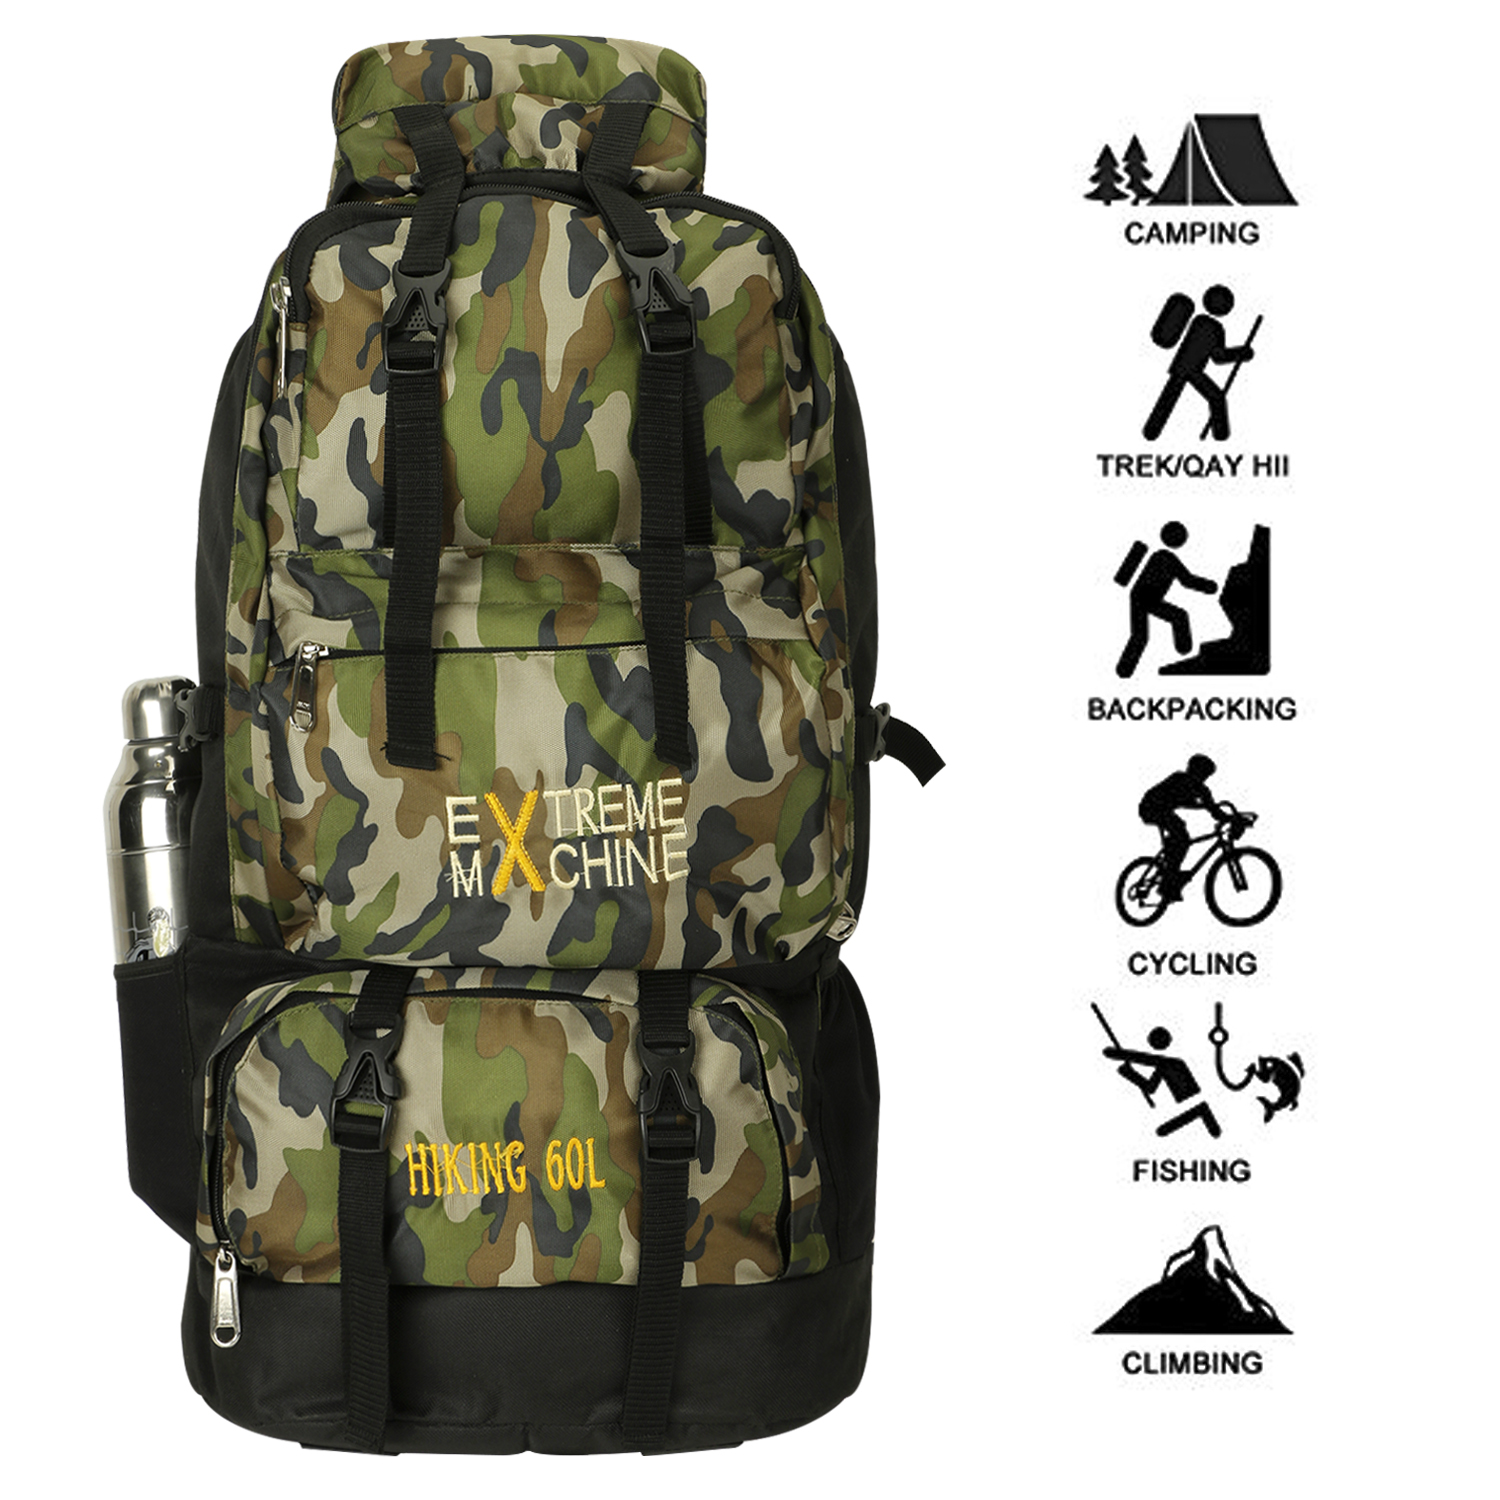 Buy Exterme Machine Military Print 90 L Backpack Bag for Trekking